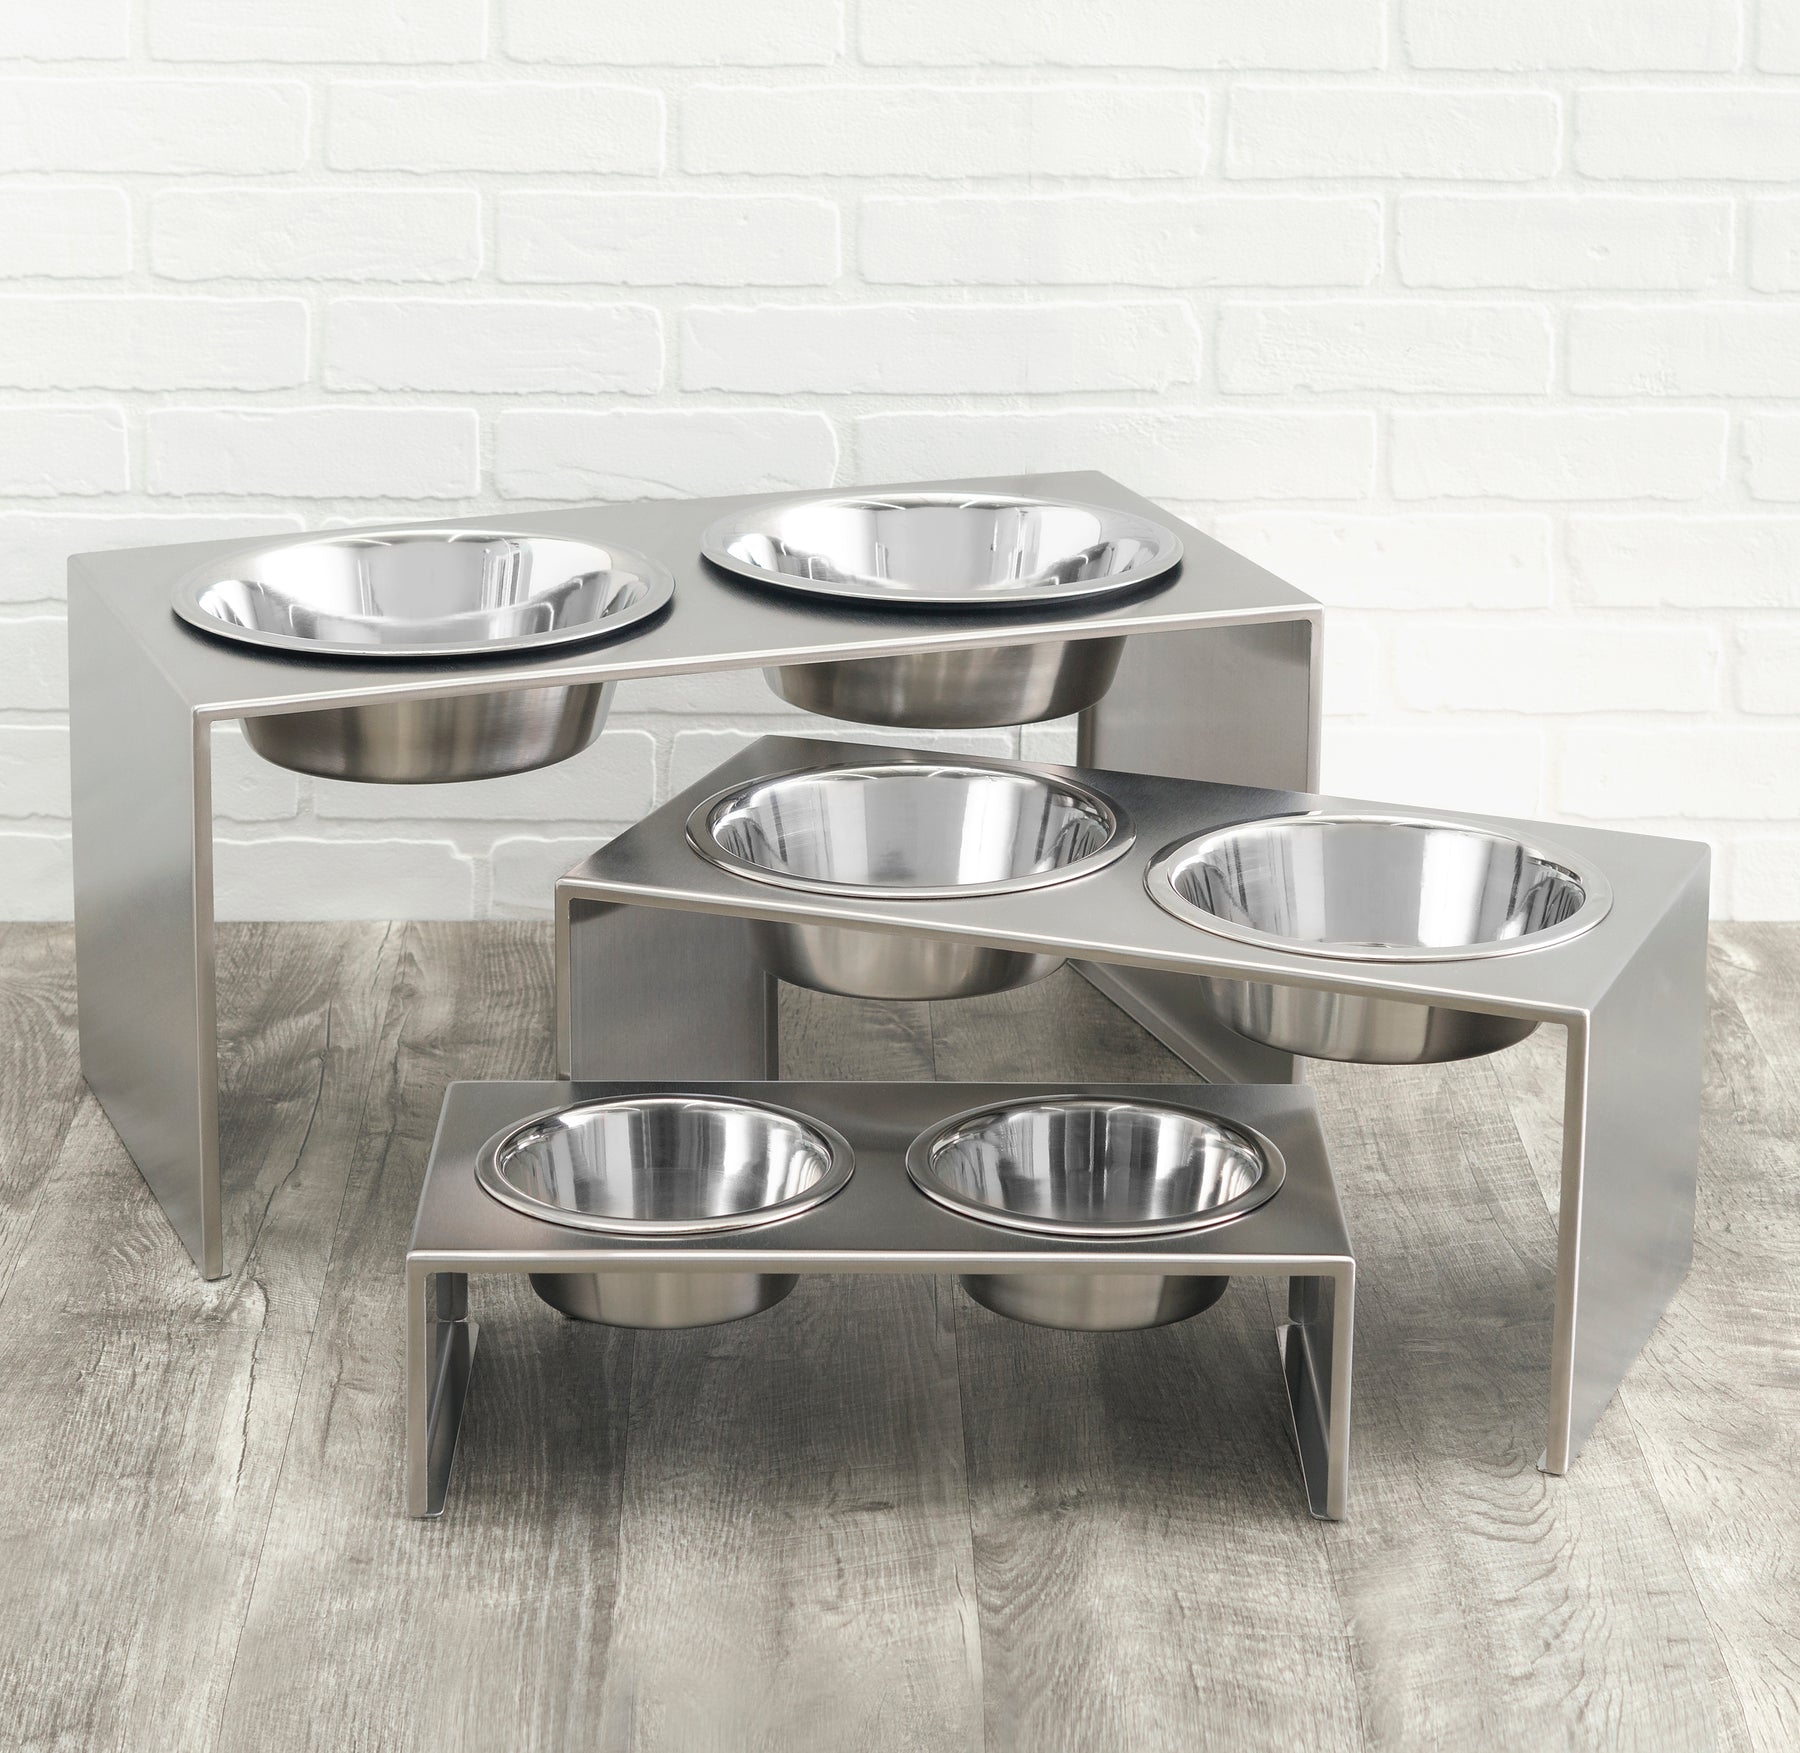 304 Stainless Steel Slow Feeder Dog Bowls, Metal Dog Food Bowls